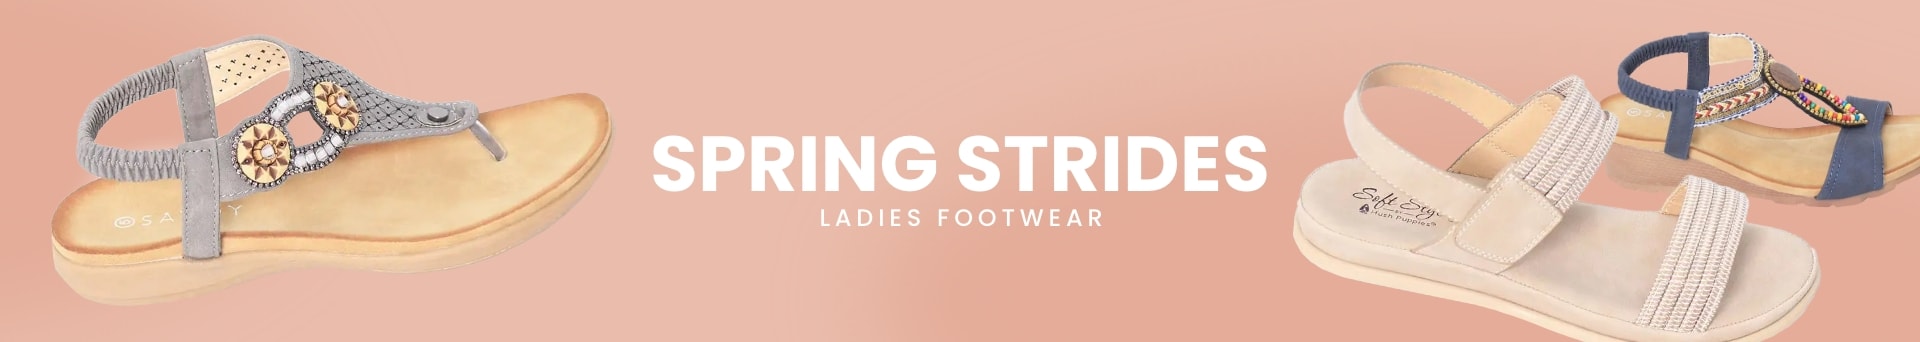 Ladies Footwear Collection Banner - Desktop